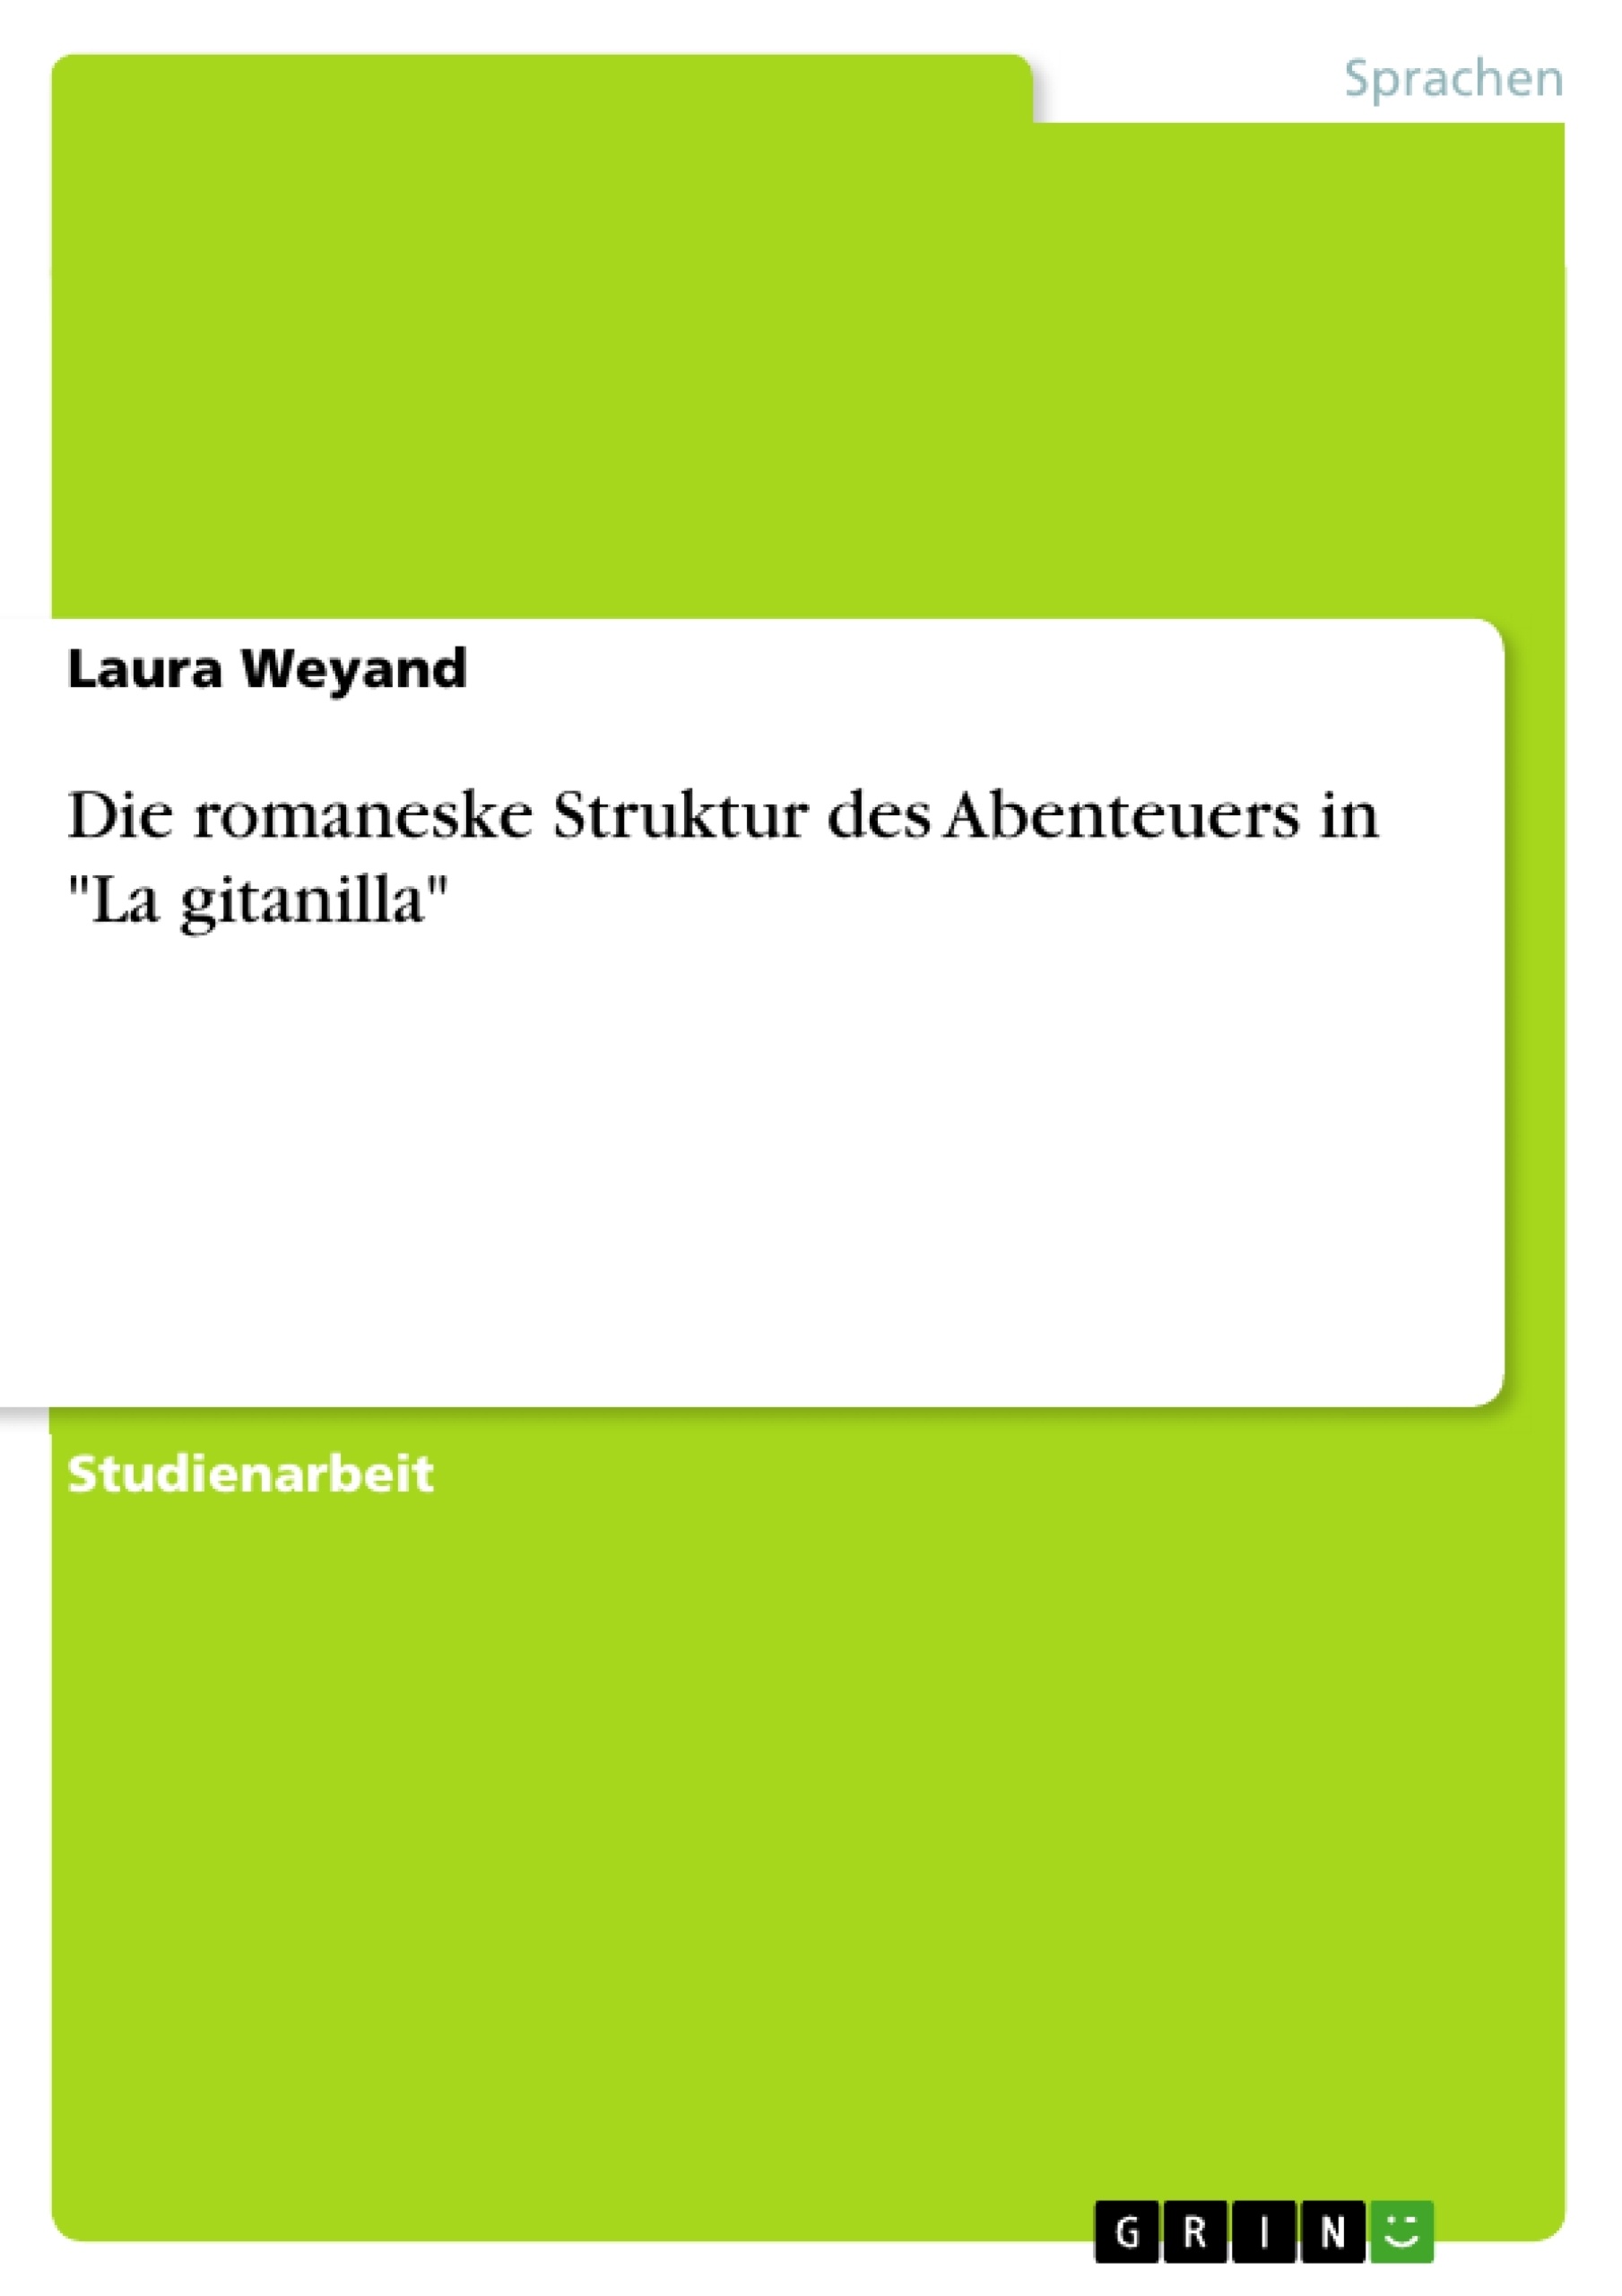 Title: Die romaneske Struktur des Abenteuers in "La gitanilla"